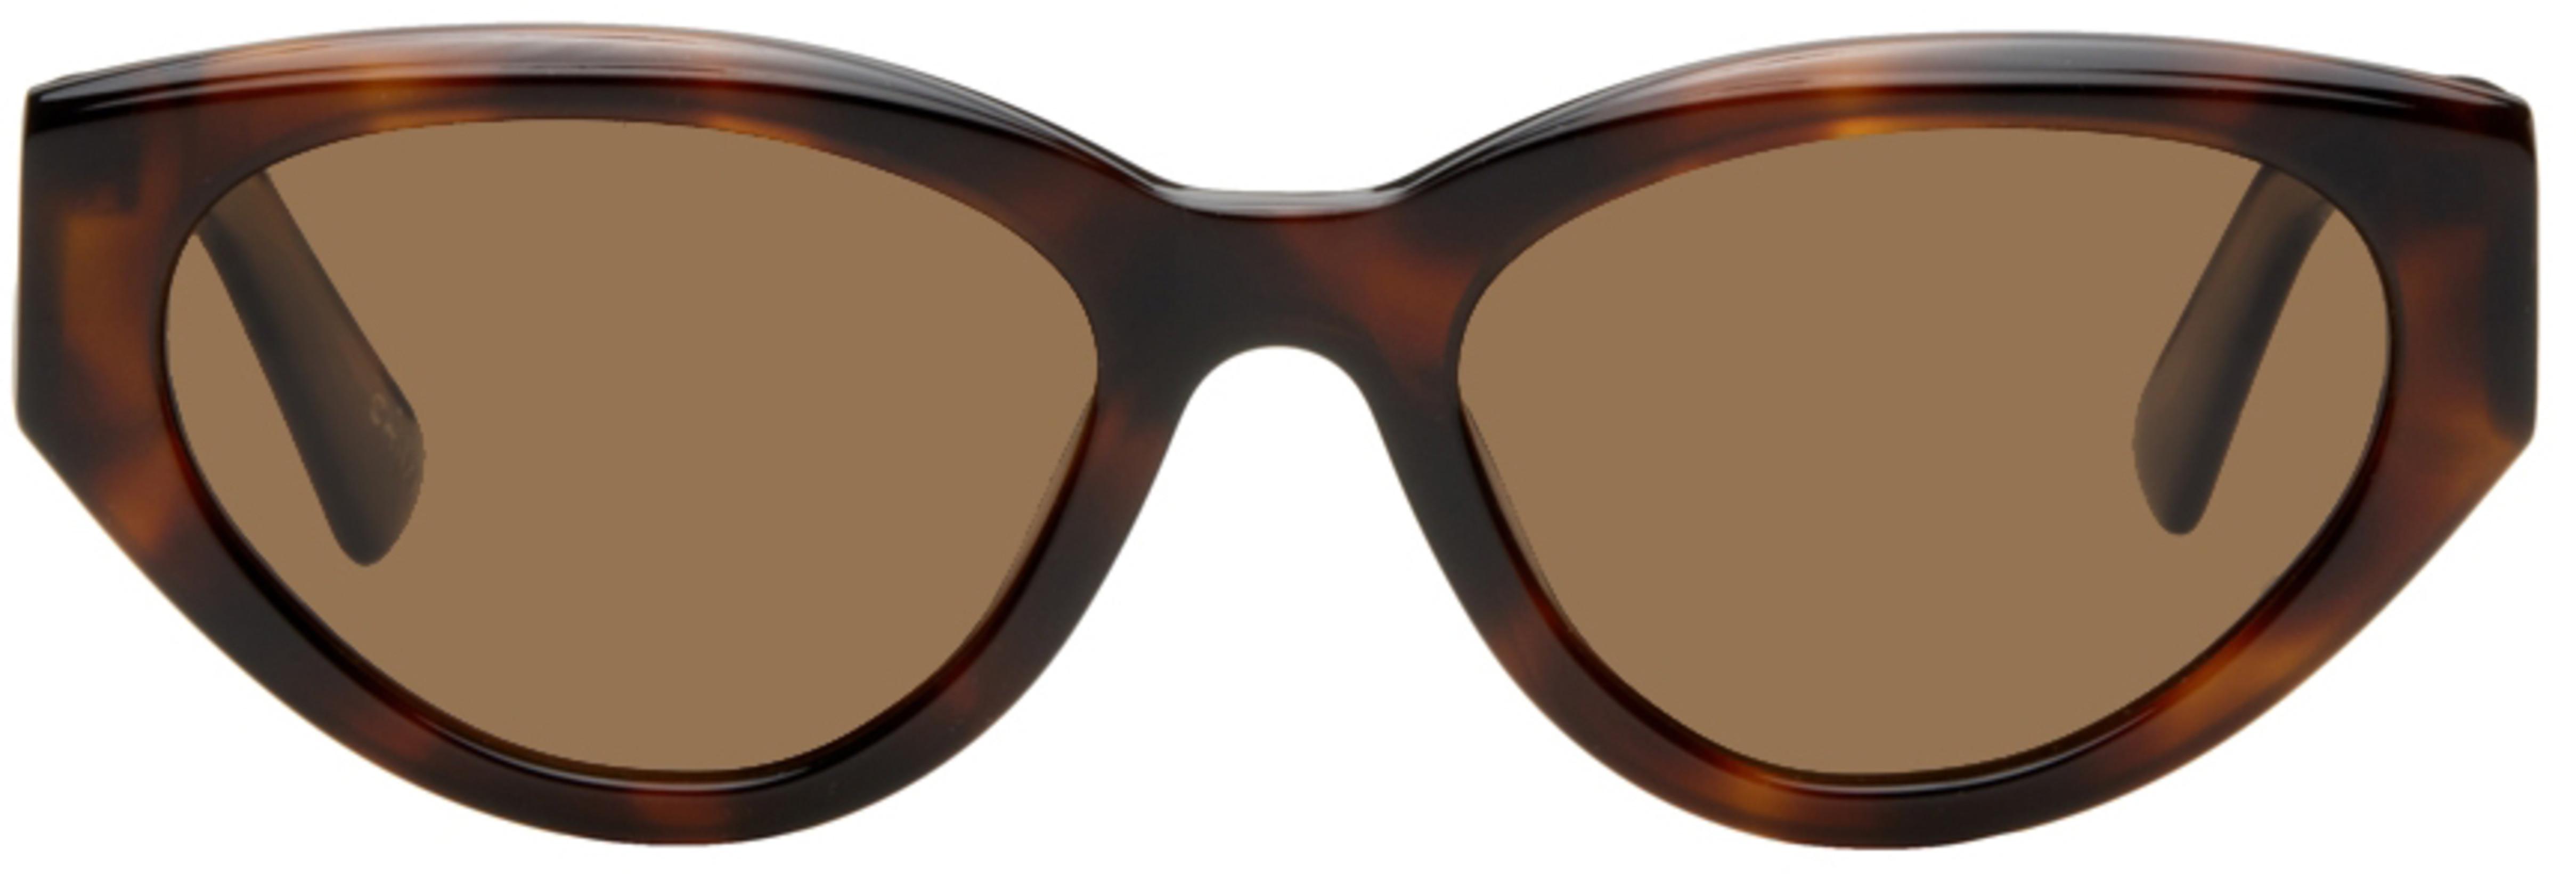 Tortoiseshell 06 Sunglasses by CHIMI